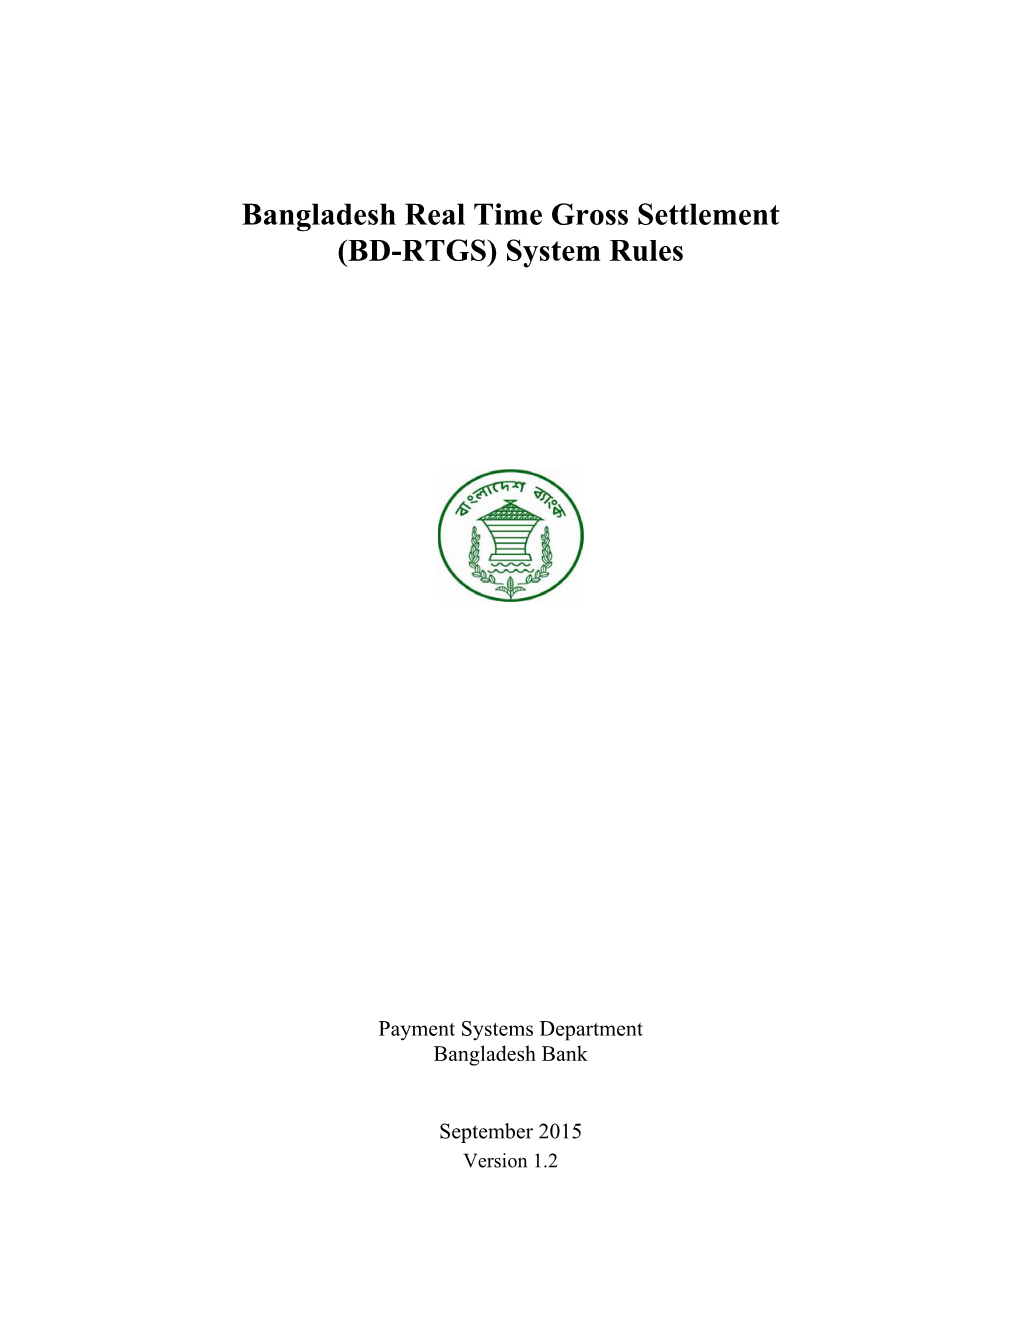 Bangladesh Real Time Gross Settlement (BD-RTGS) System Rules